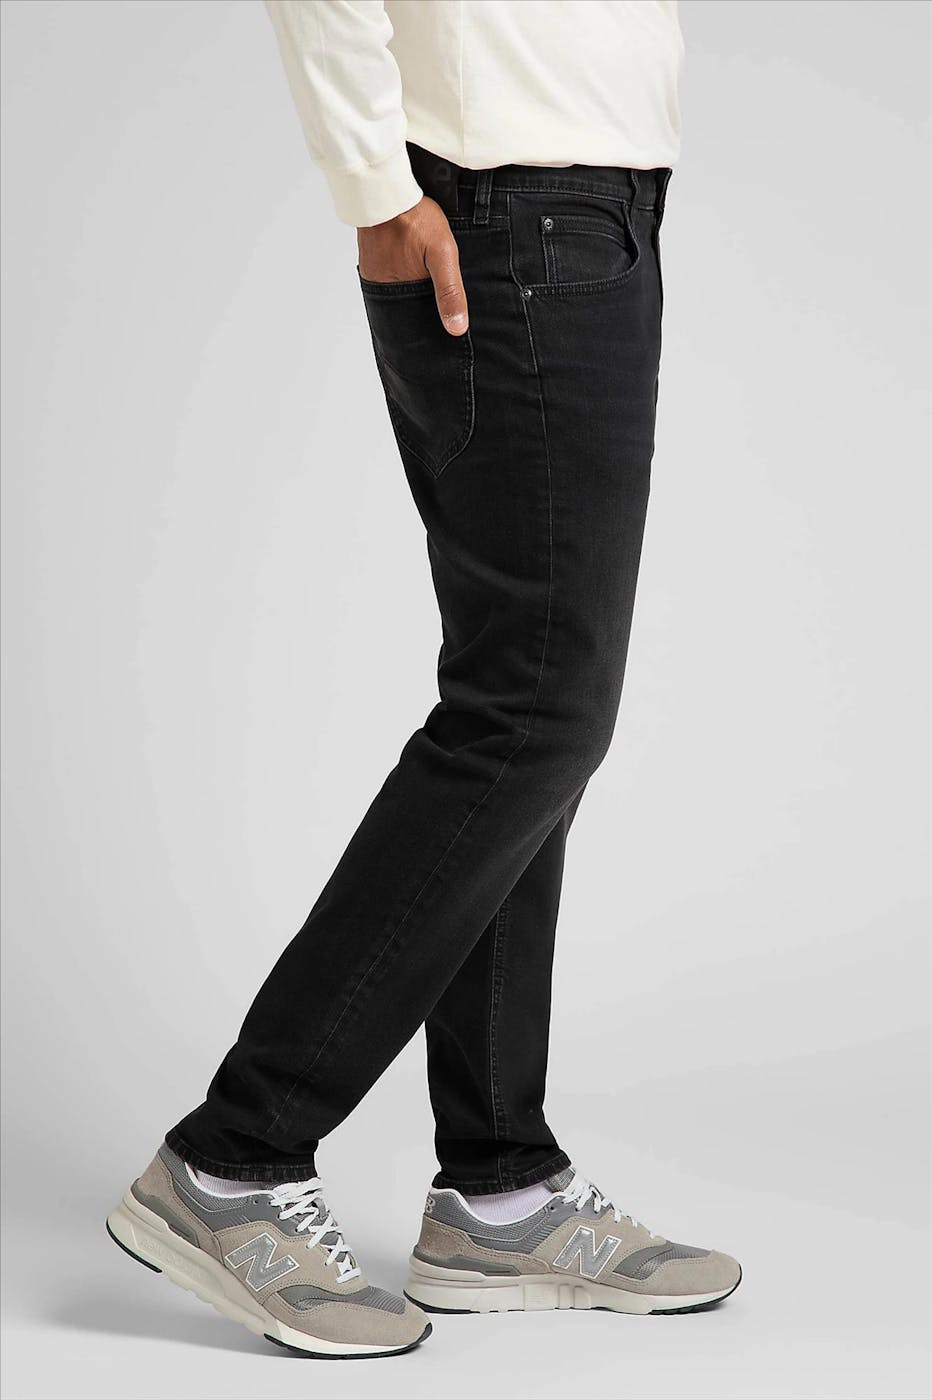 Lee - Zwarte Austin Regular Tapered jeans